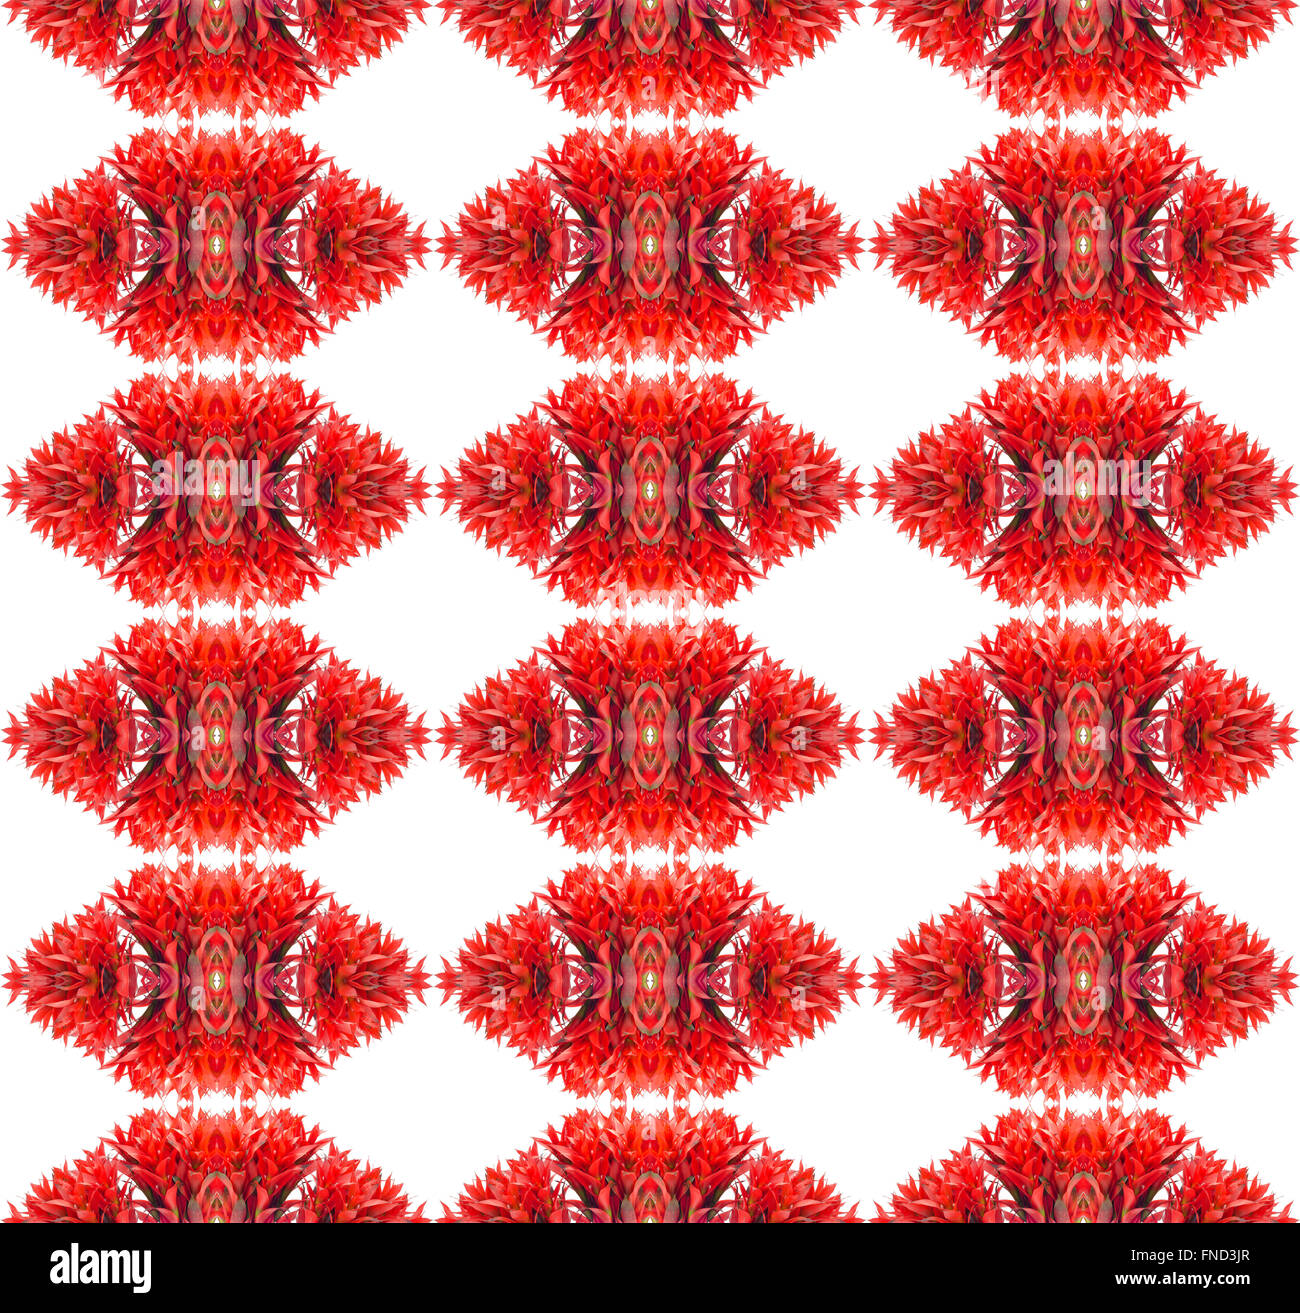 Bromeliad seamless pattern background Stock Photo